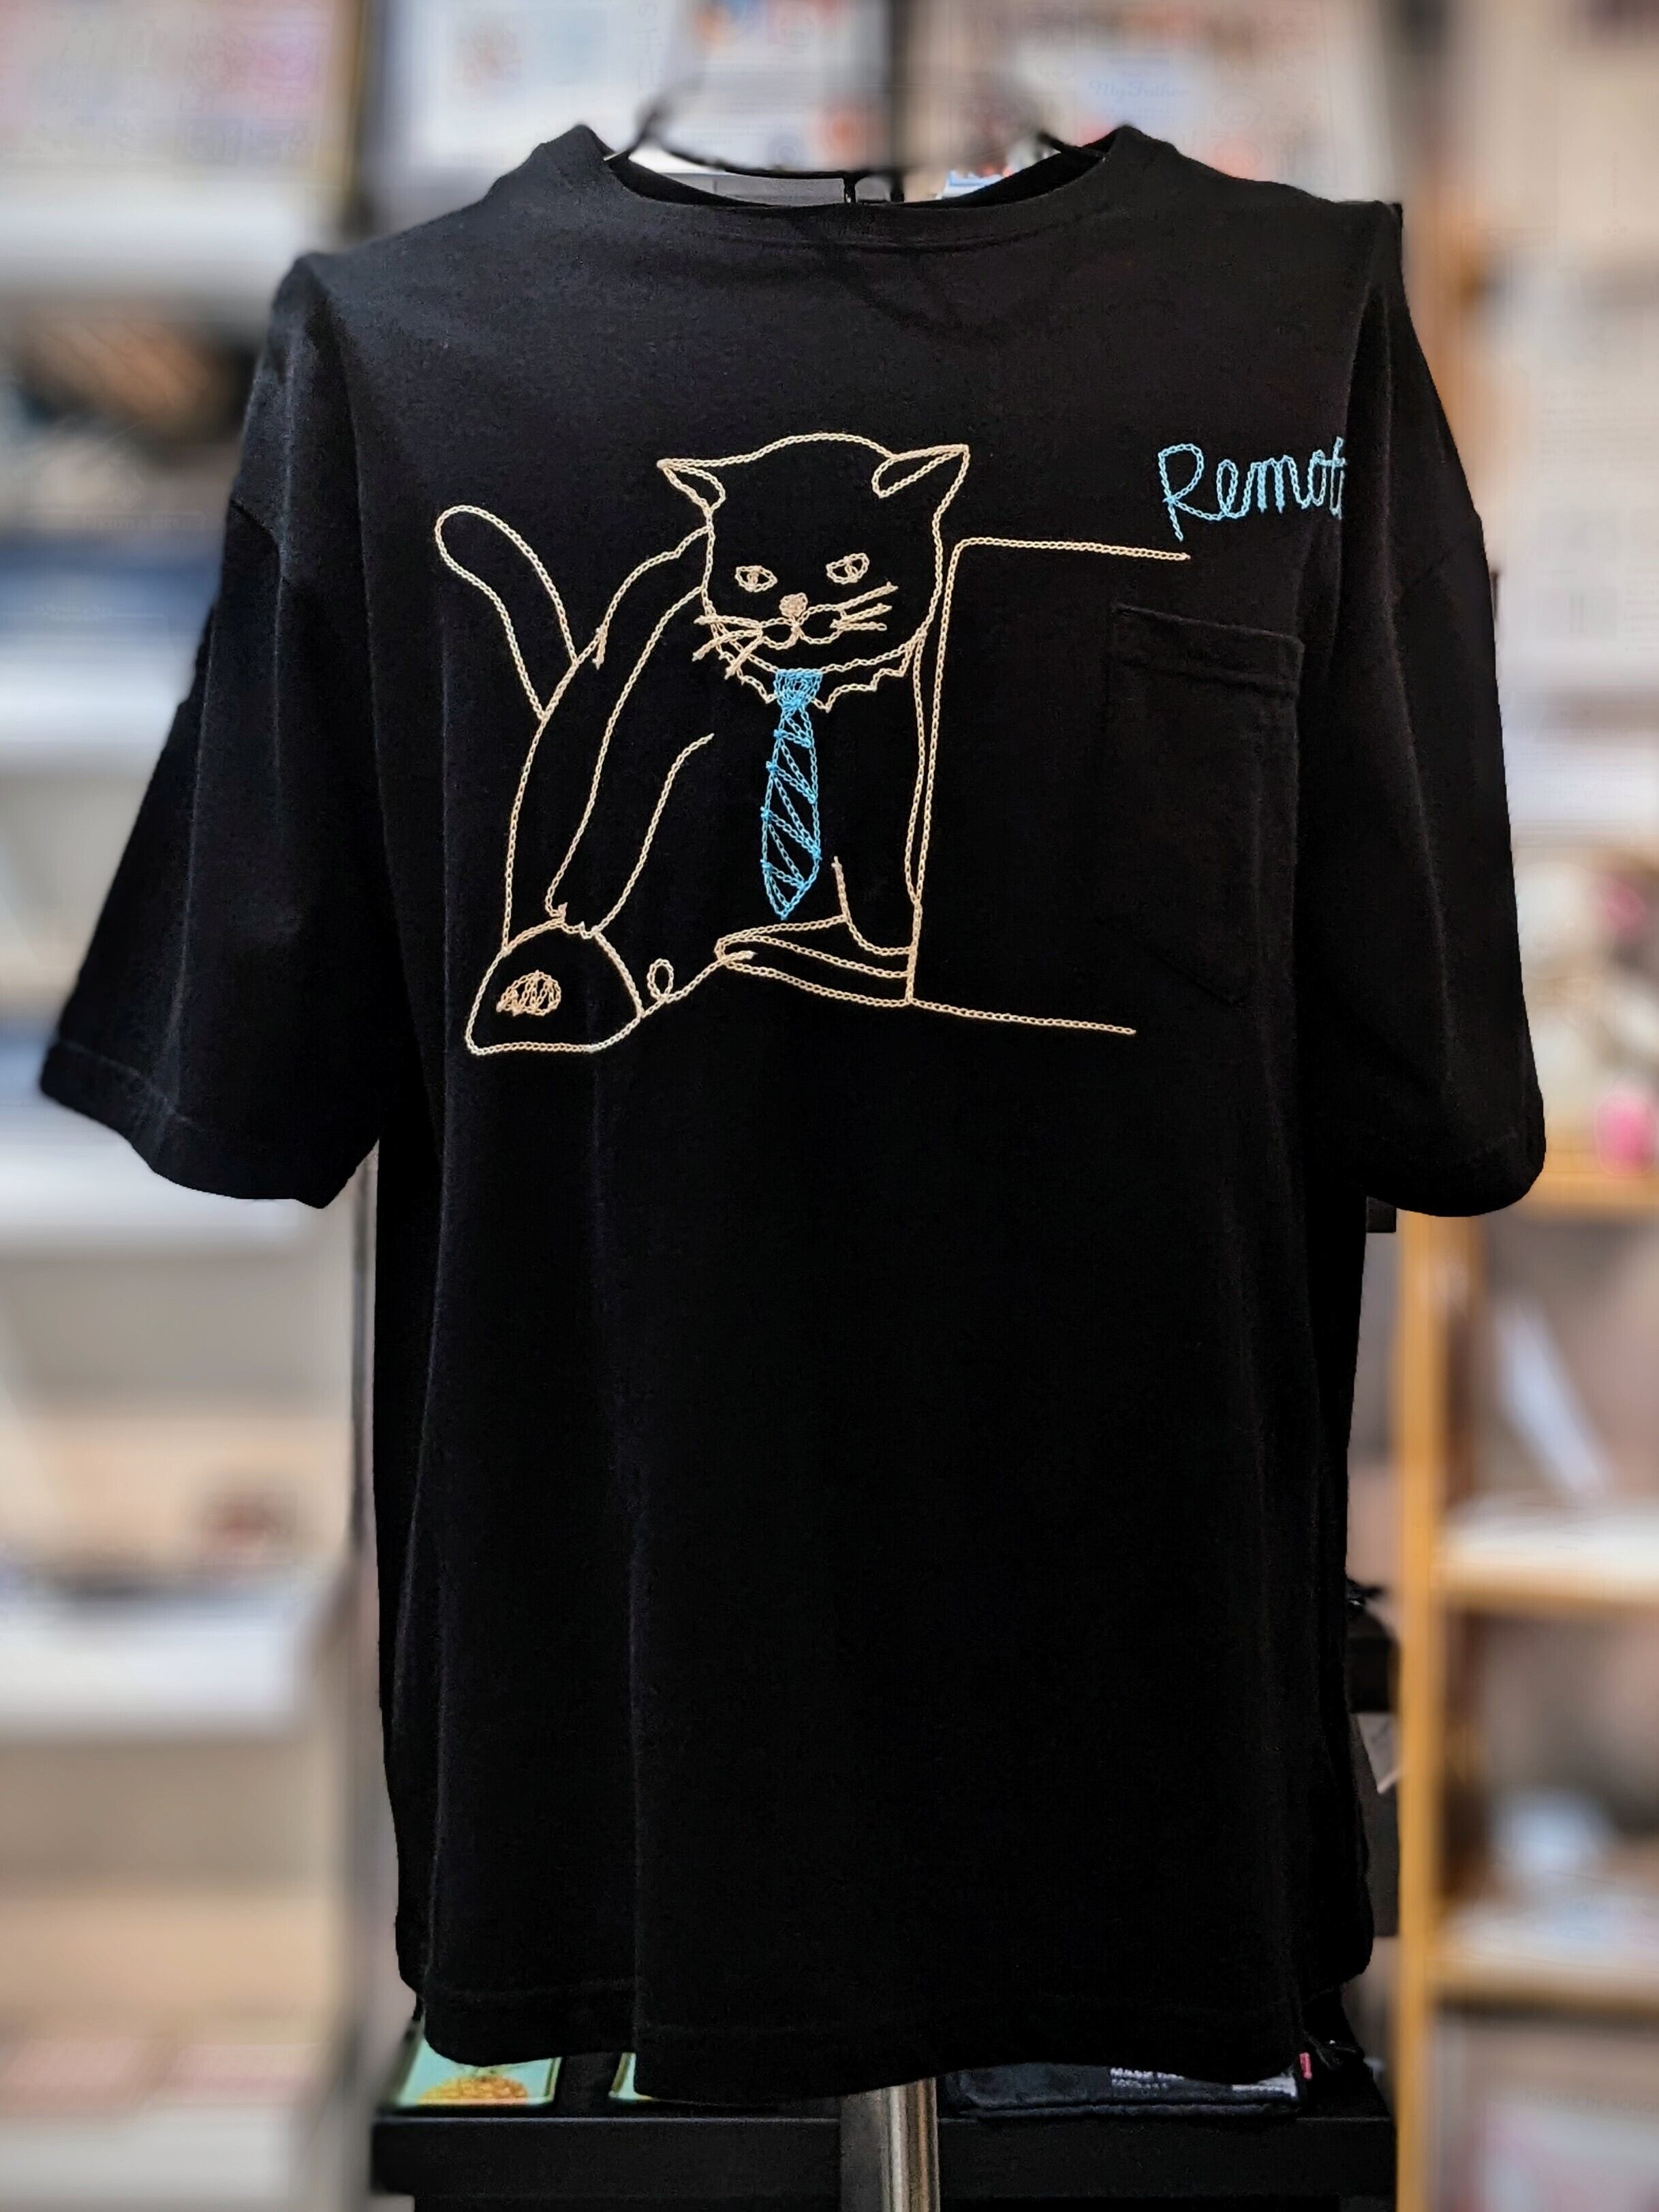 BRODRE ハンドル刺繍 Cat Remote Tシャツ ブラック [BR6002] | 風と地の吾